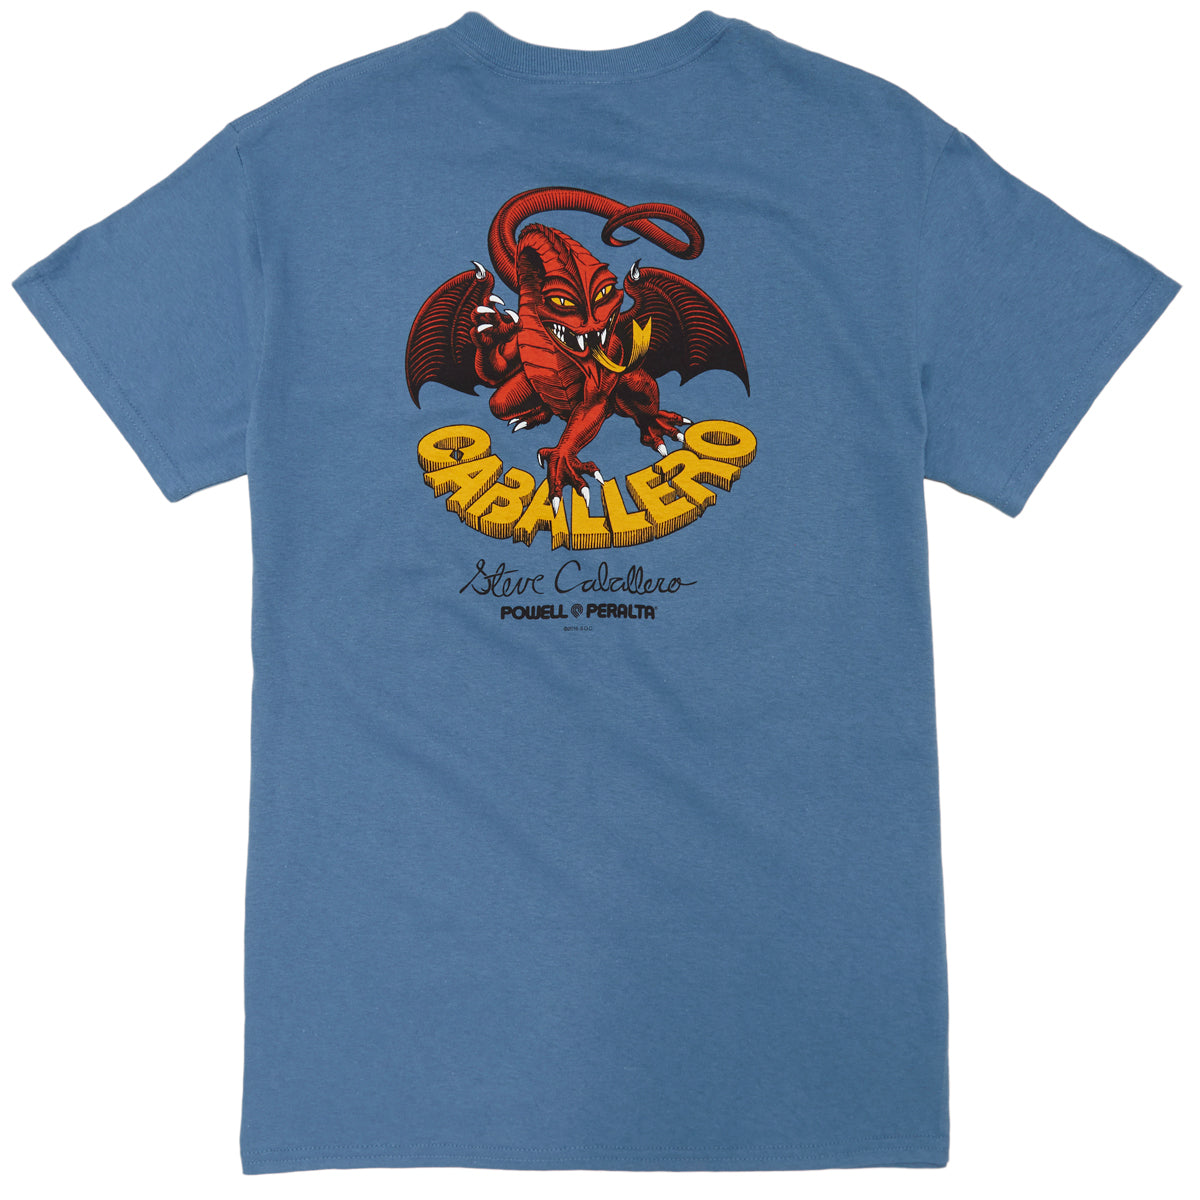 Powell-Peralta Steve Caballero Classic Dragon II T-Shirt - Indigo Blue image 1